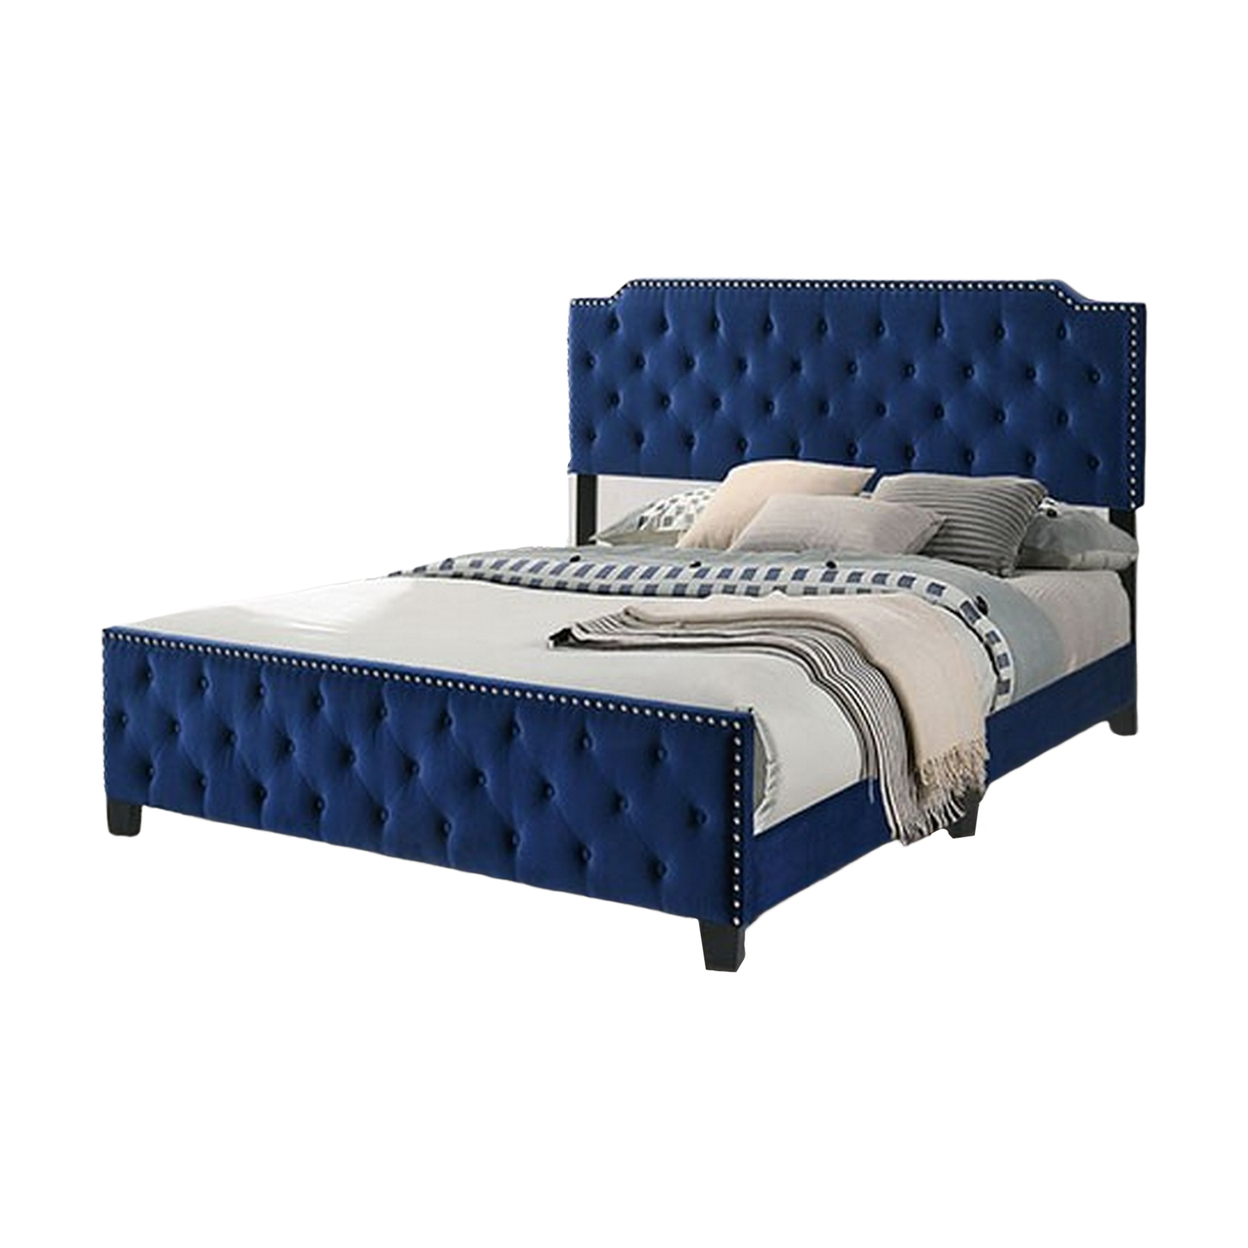 Agapi California King Bed, Button Tufted, Nailhead Trim, Navy Upholstery - Saltoro Sherpi